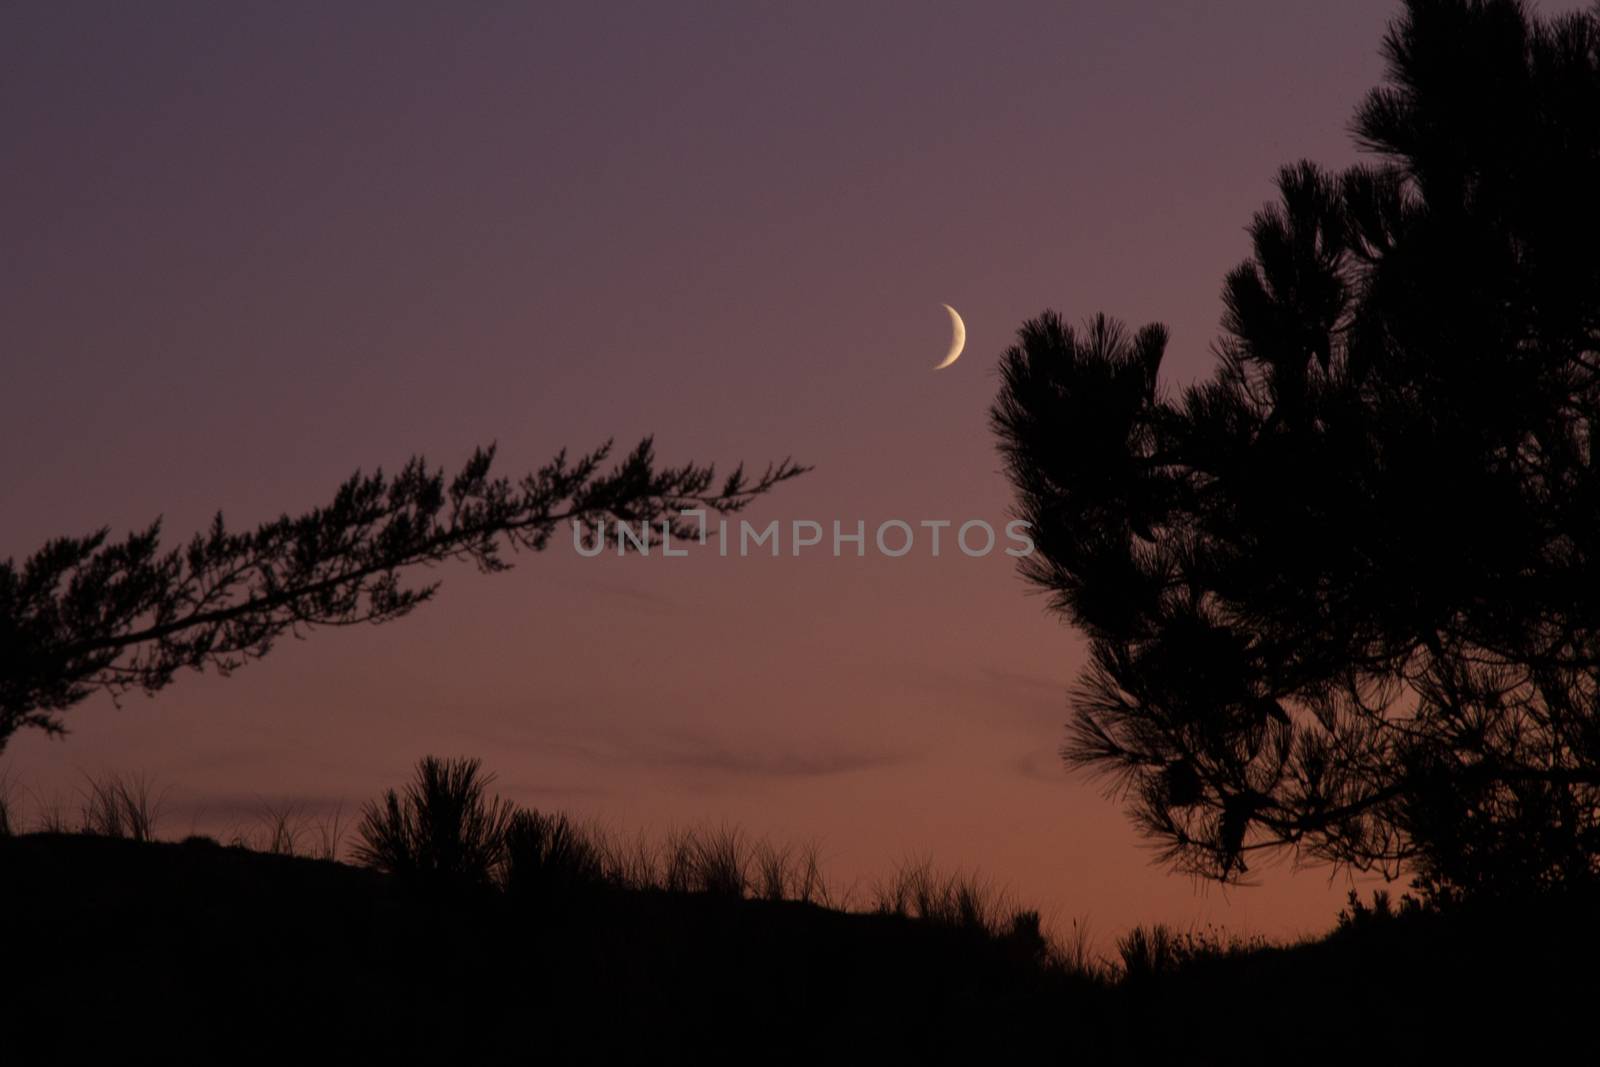 Moonlight at Dusk by samULvisuals